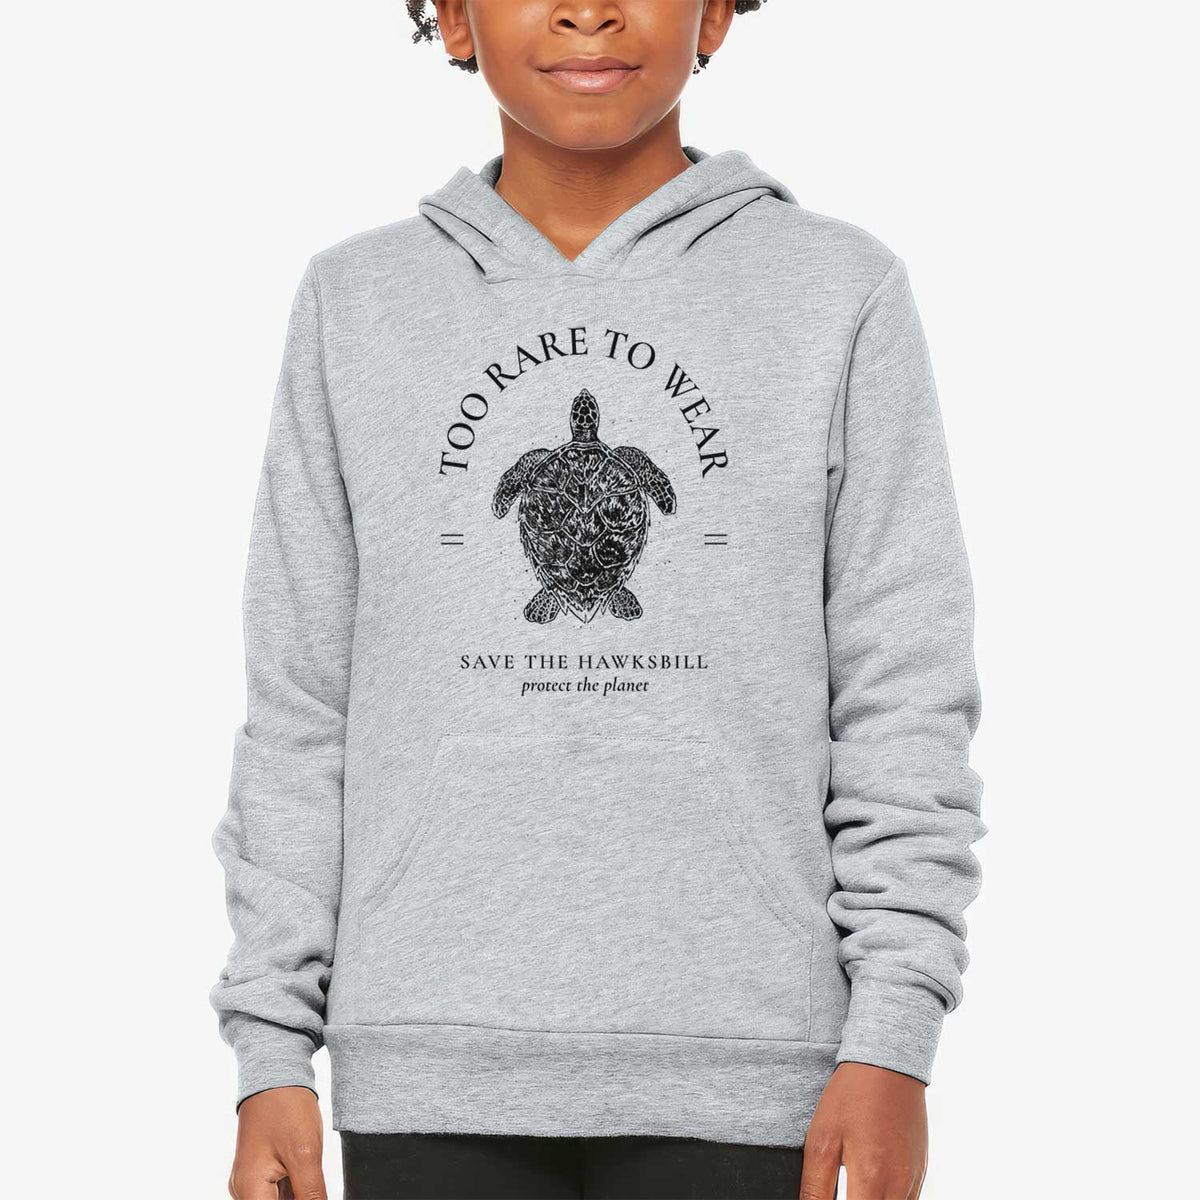 Too Rare to Wear - Save the Hawksbill - Youth Hoodie Sweatshirt